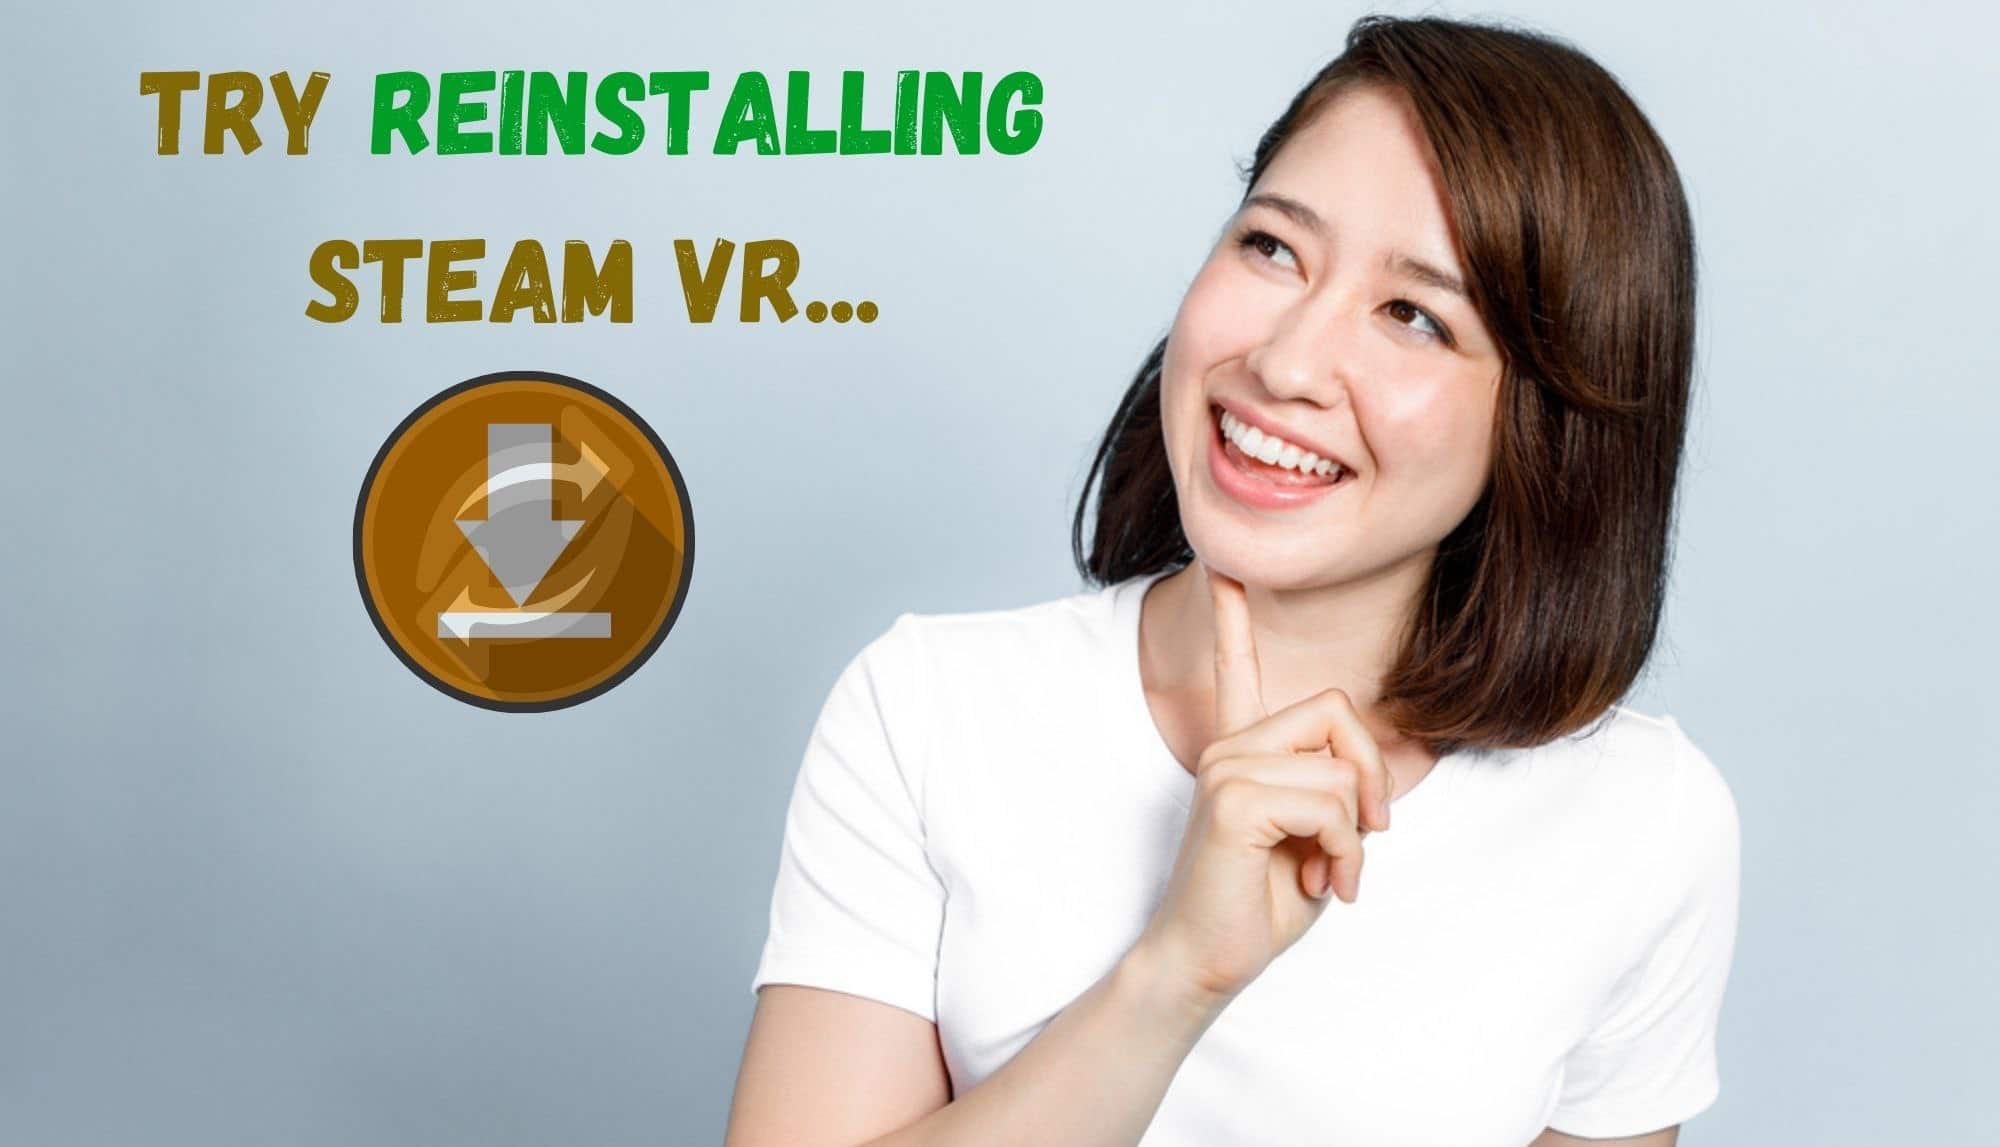 Try reinstalling Steam VR